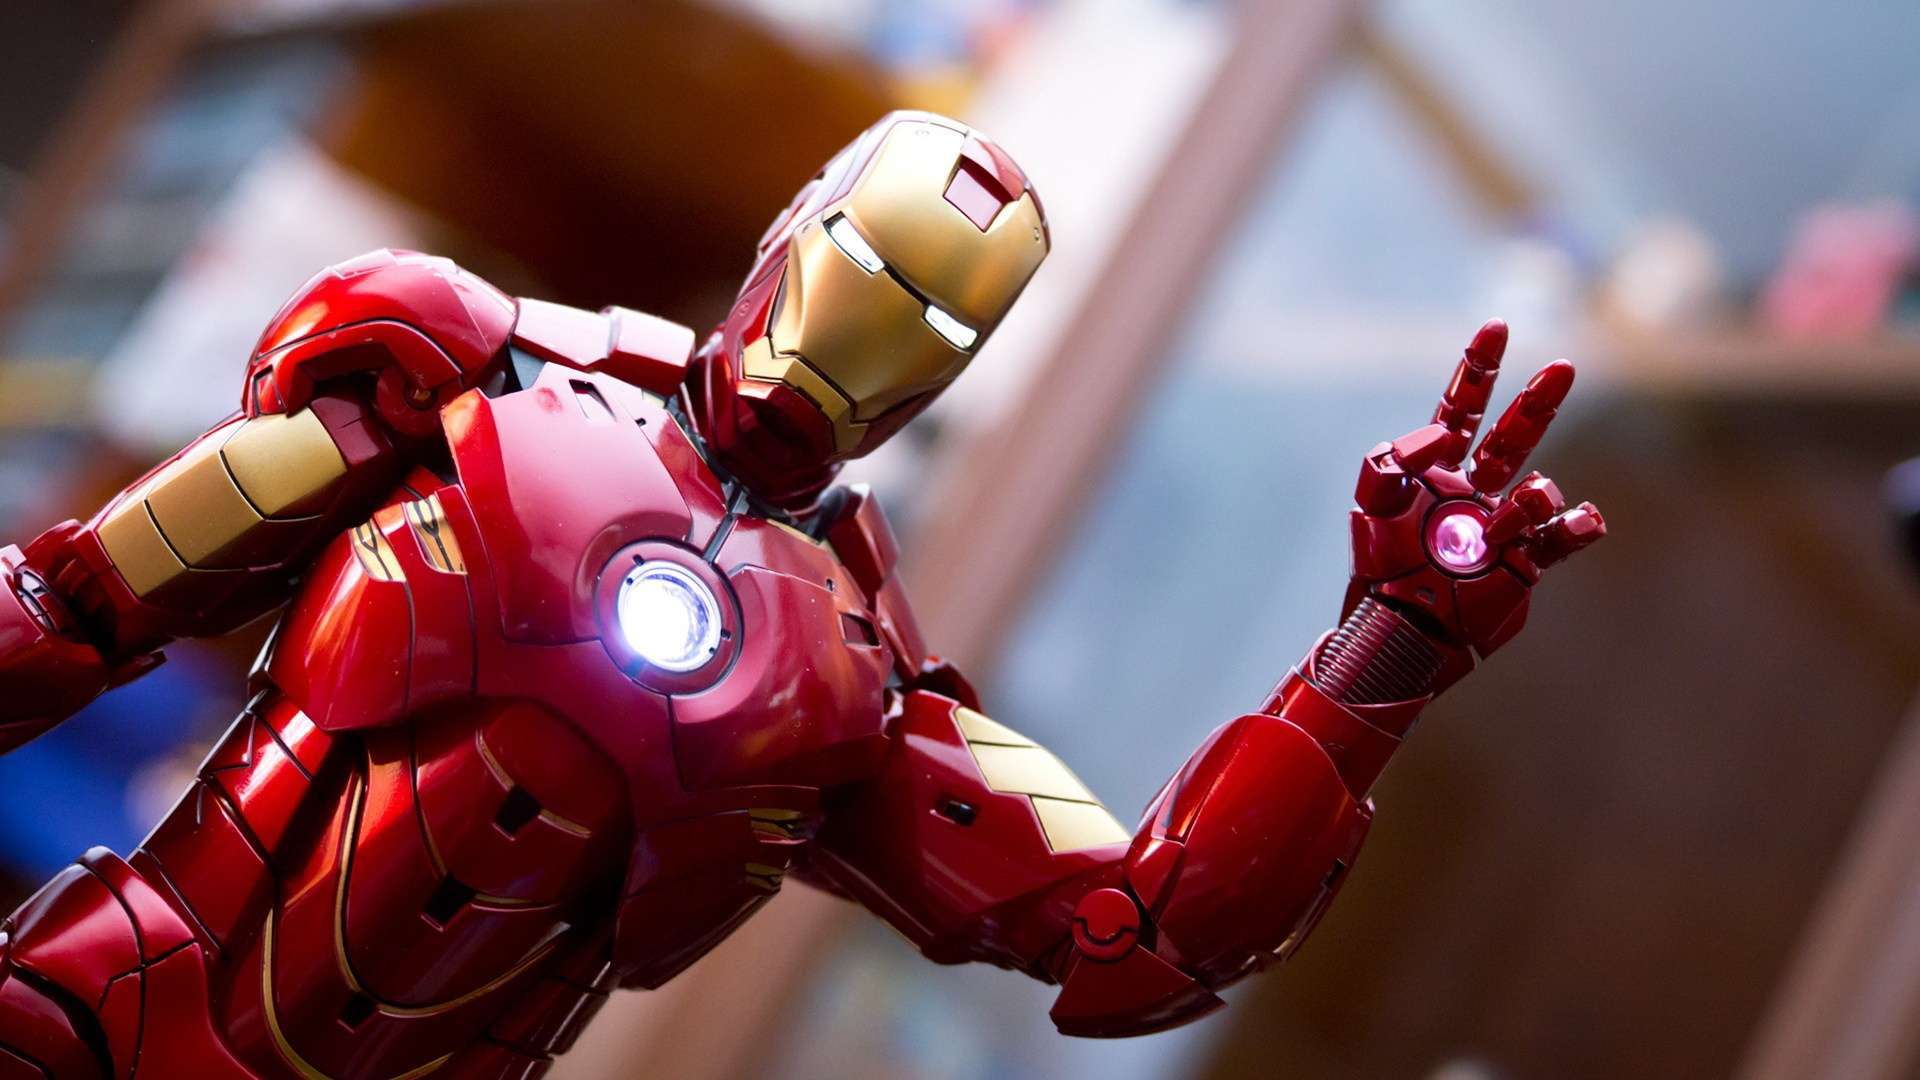 Wallpaper Toy Iron Man Gesture HD 1080p Upload At May